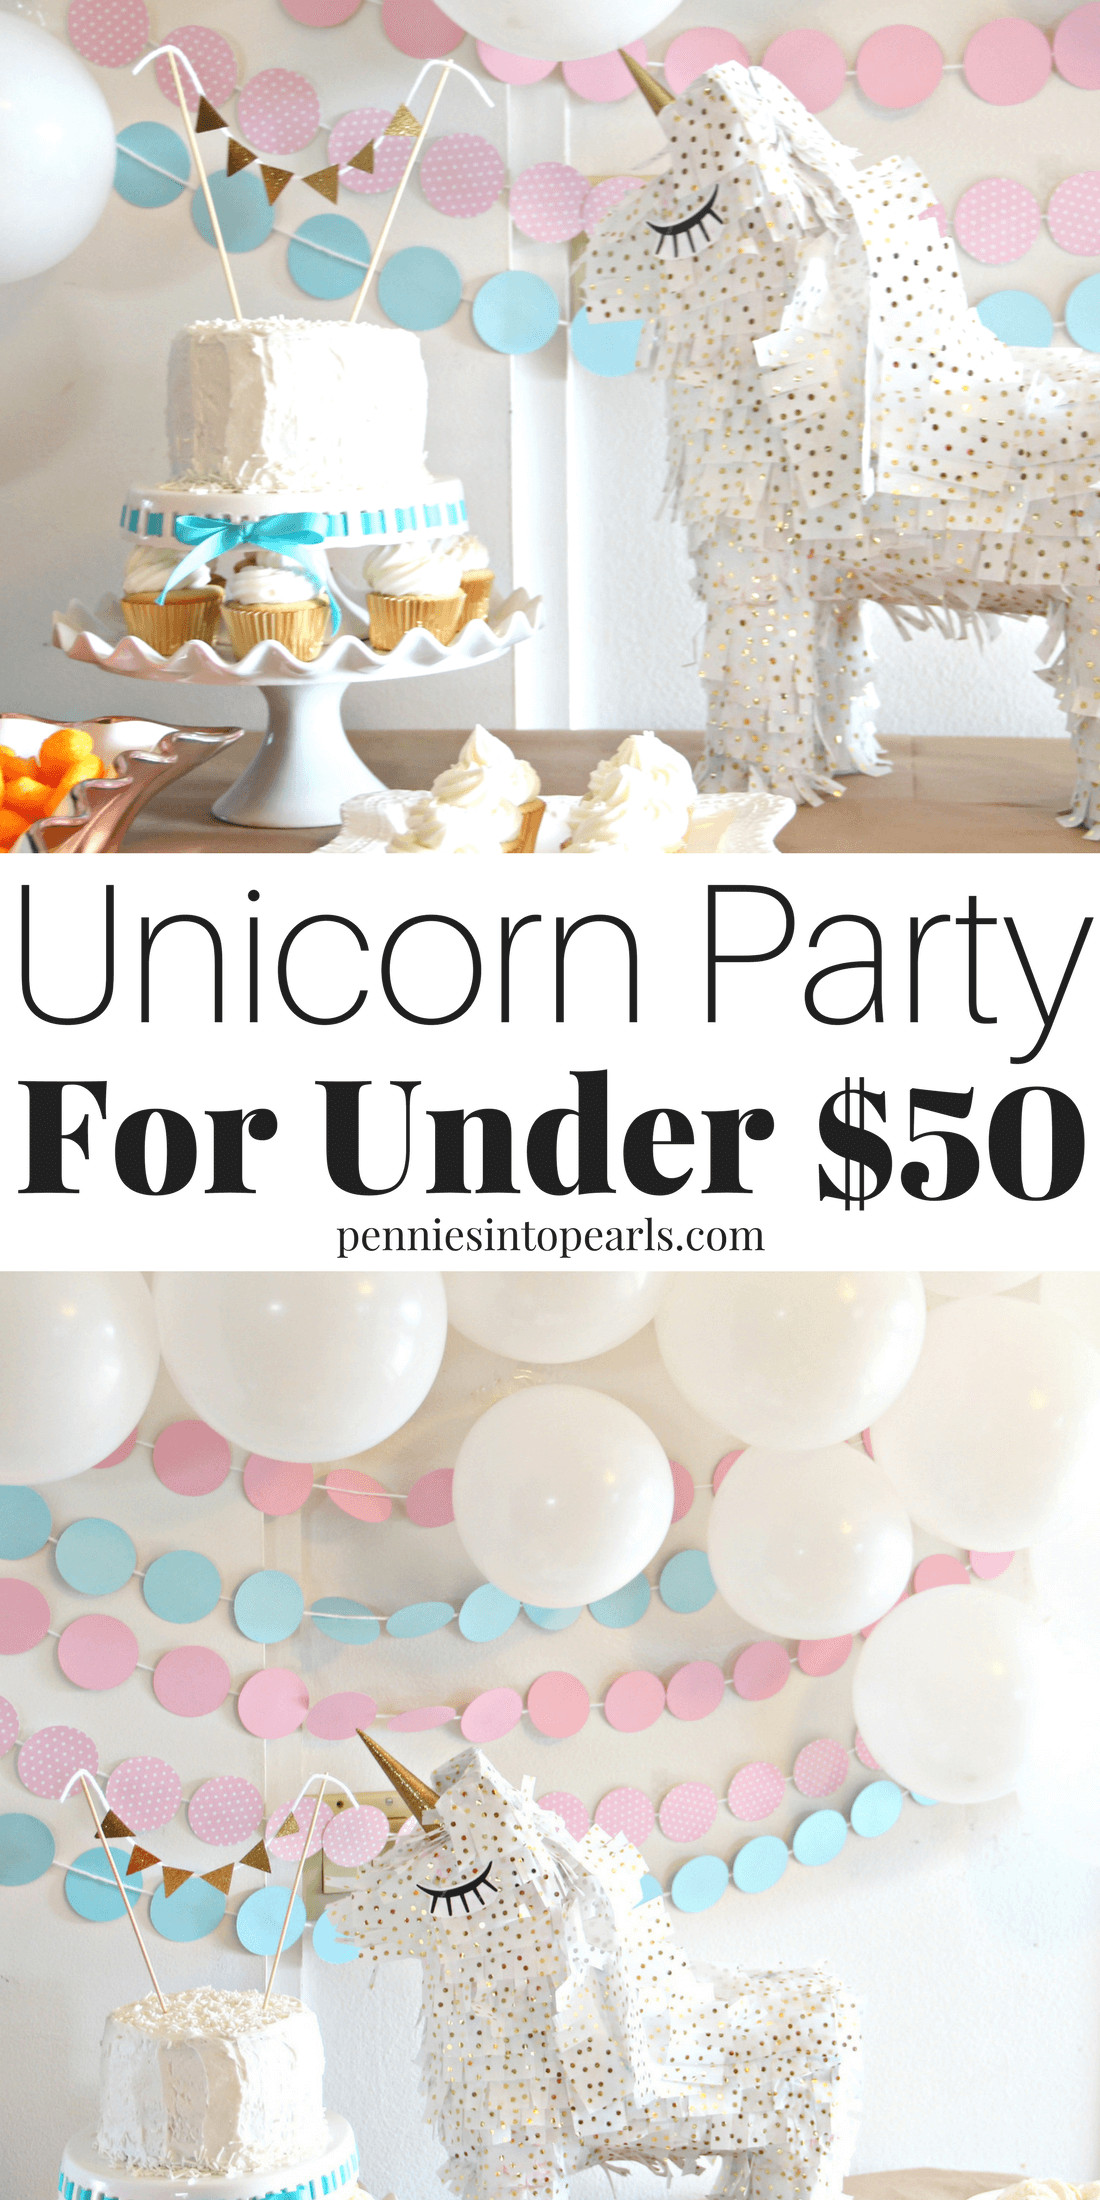 Unicorn Theme Tea Party Food Ideas For Girls
 Unicorn Birthday Party Ideas on a Bud for Under $50